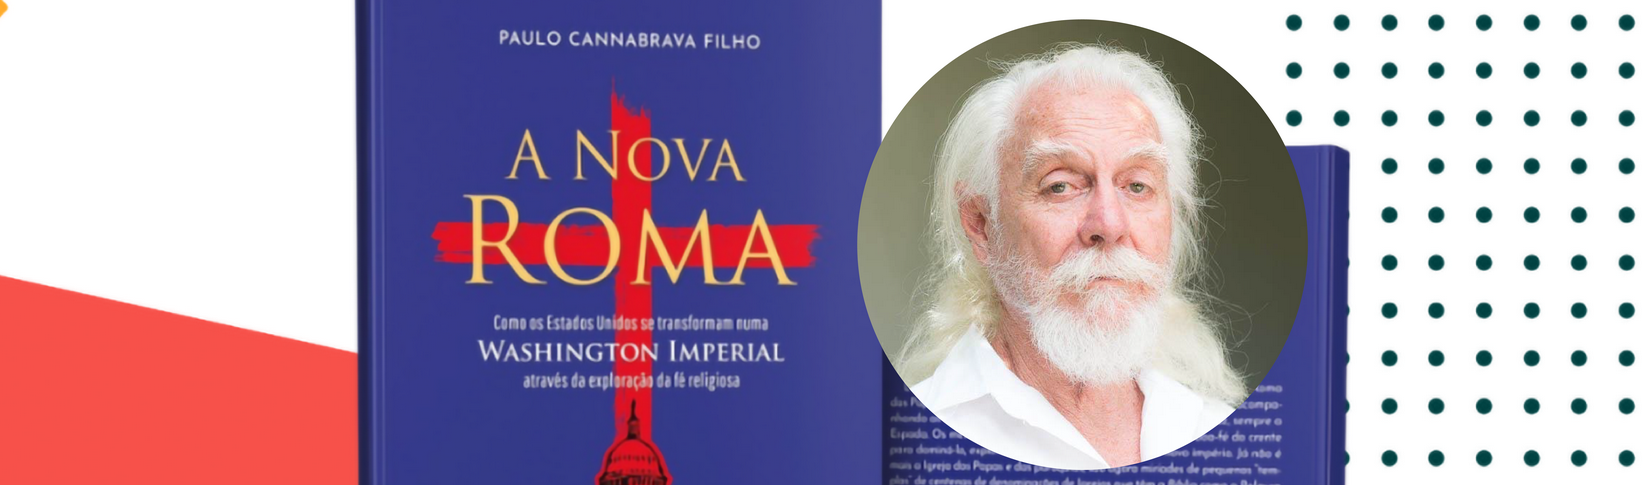 Anote na agenda: Paulo Cannabrava lança a obra “A Nova Roma” neste sábado (10), em SP